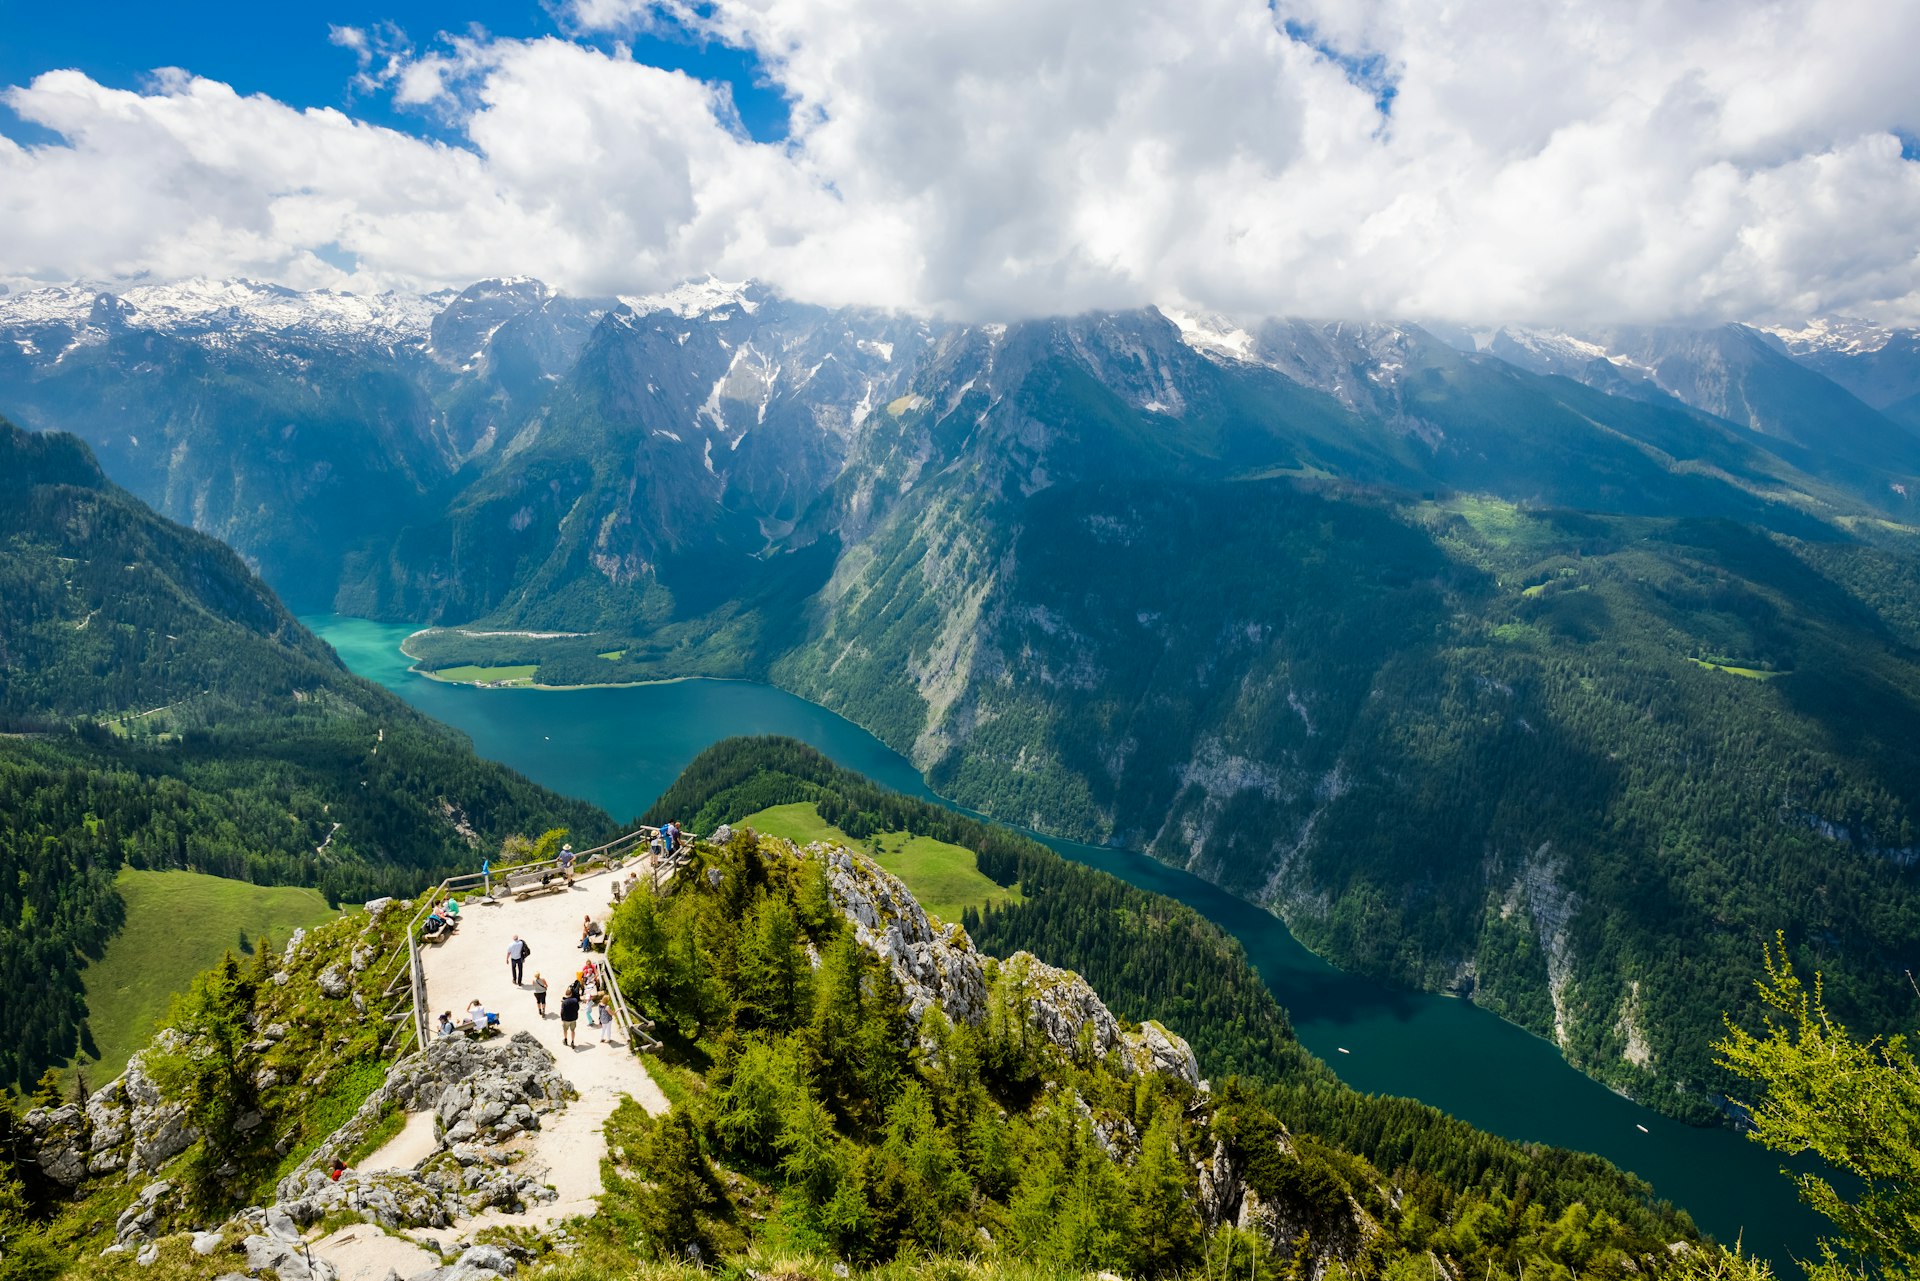 View of Konigssee from Jenner Peak in Berchtesgaden, Germany